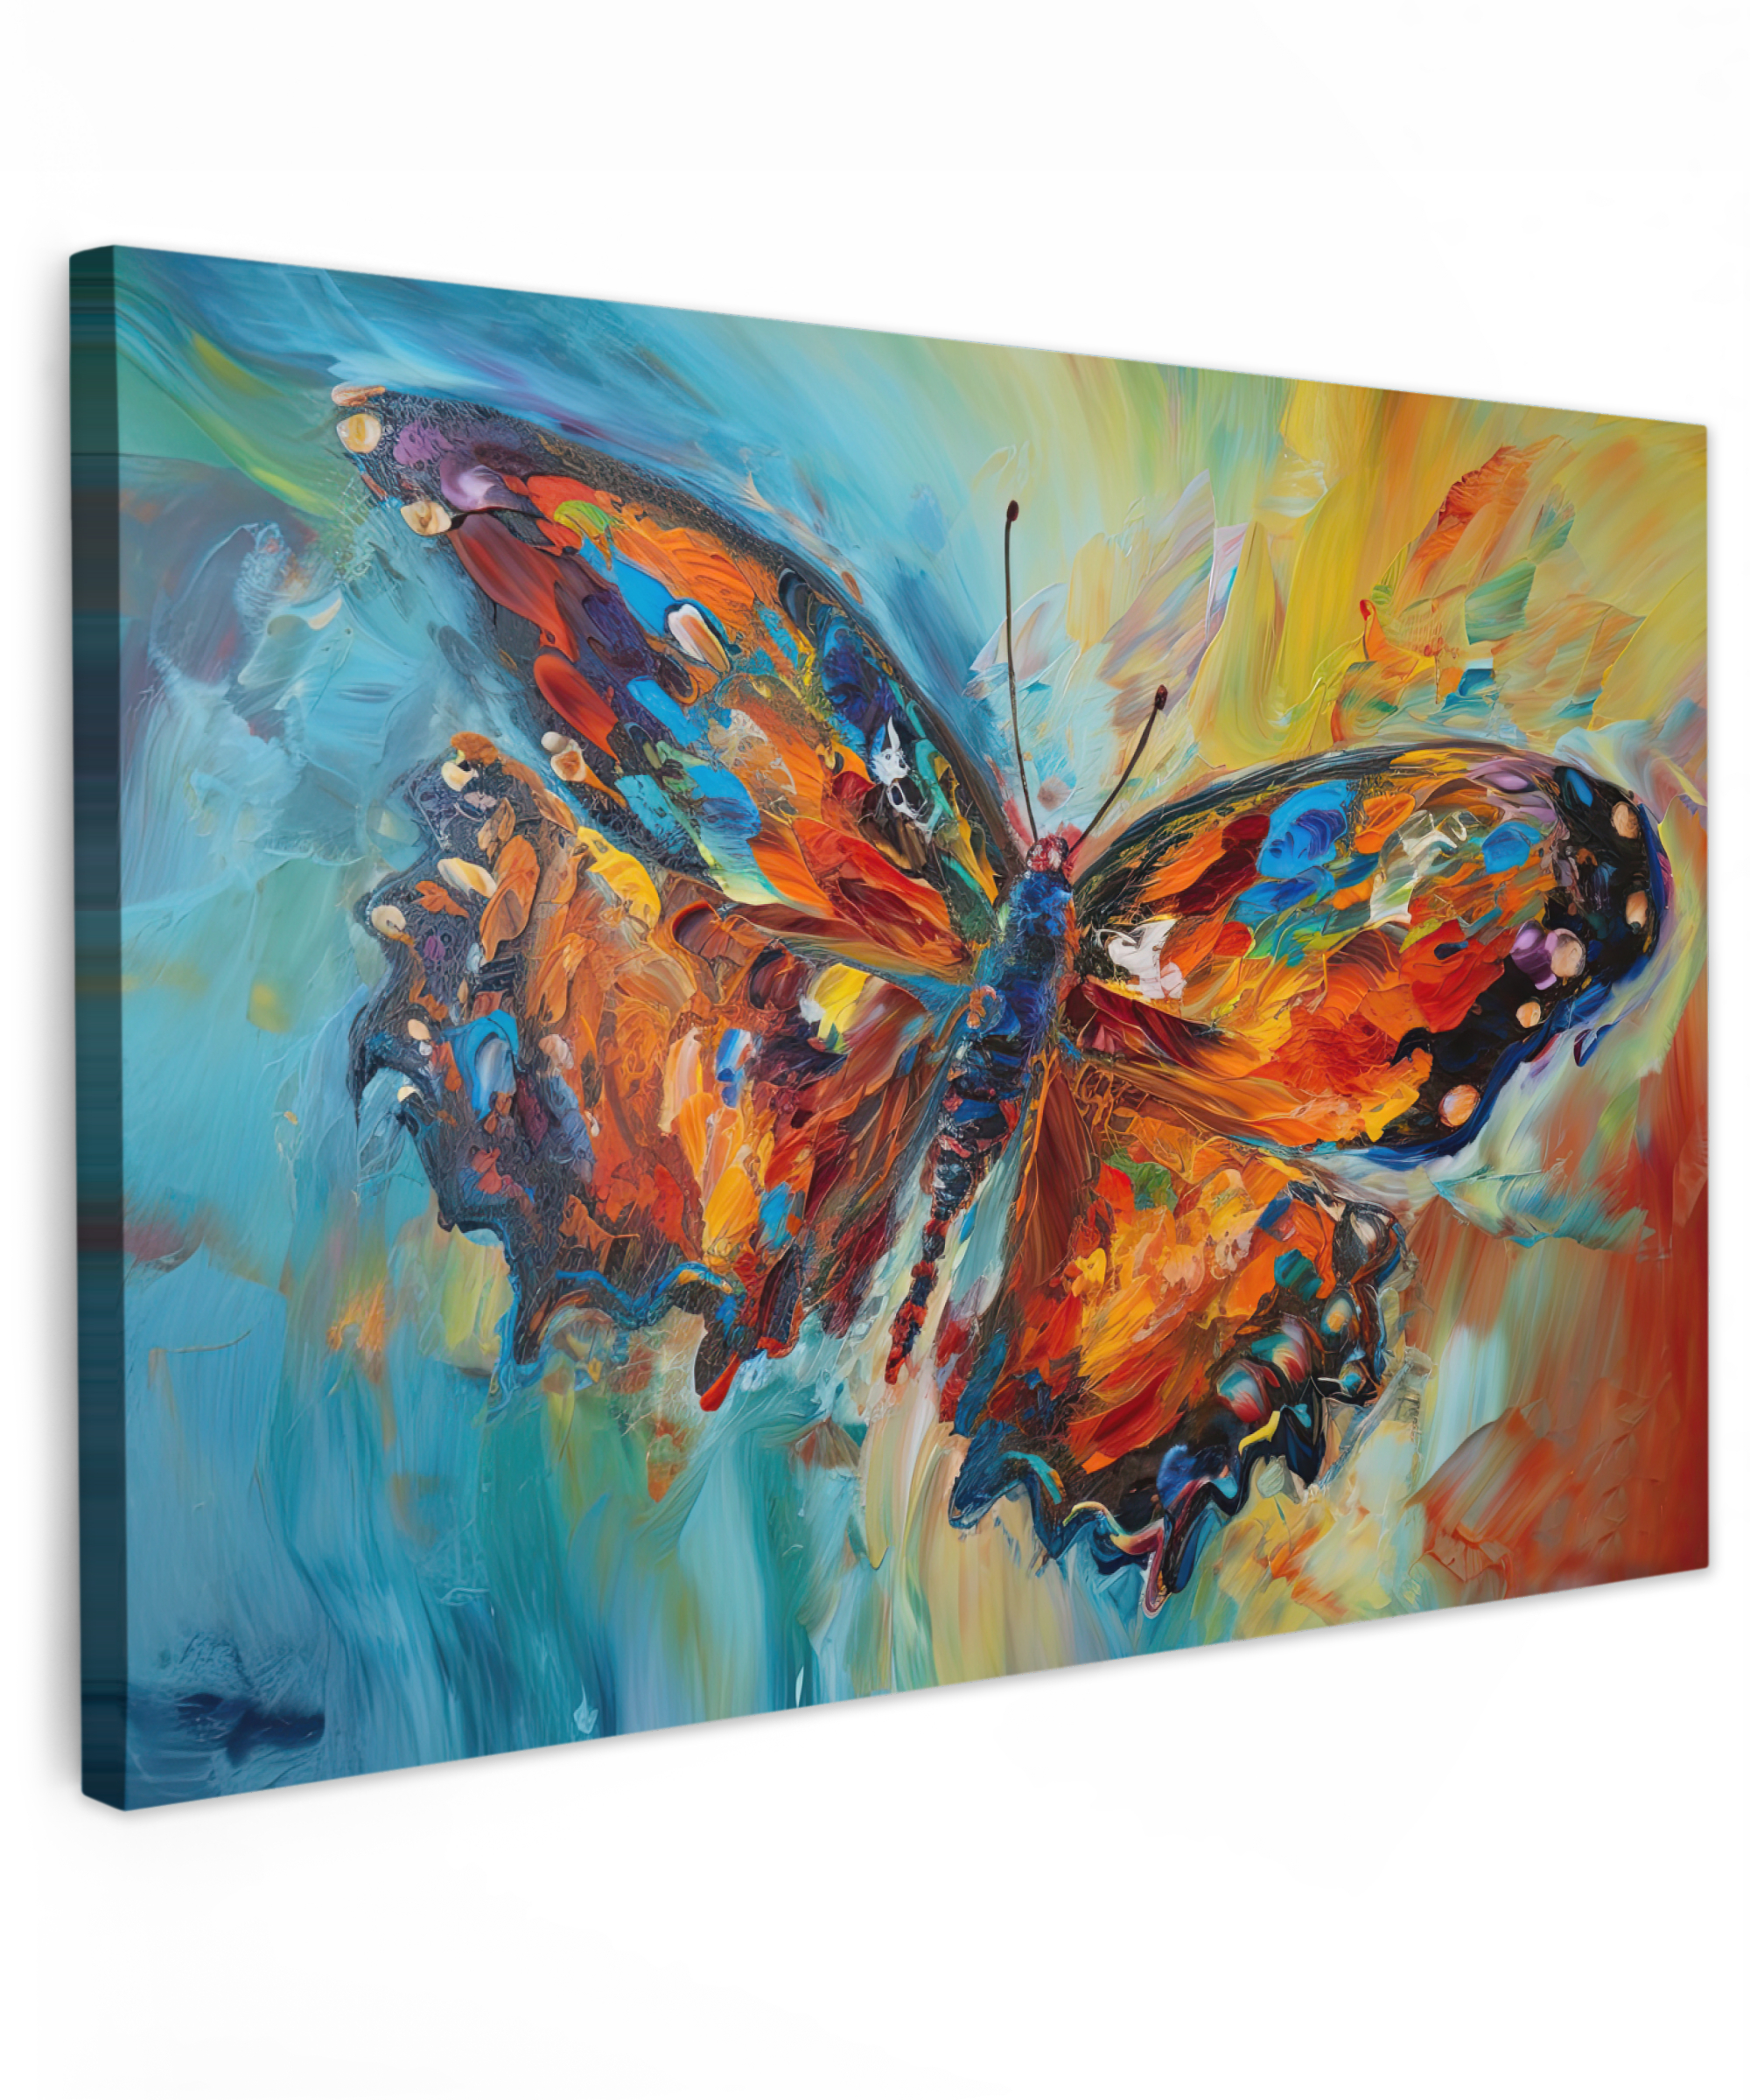 Leinwandbild - Schmetterling - Farben - Kunst - Gemälde